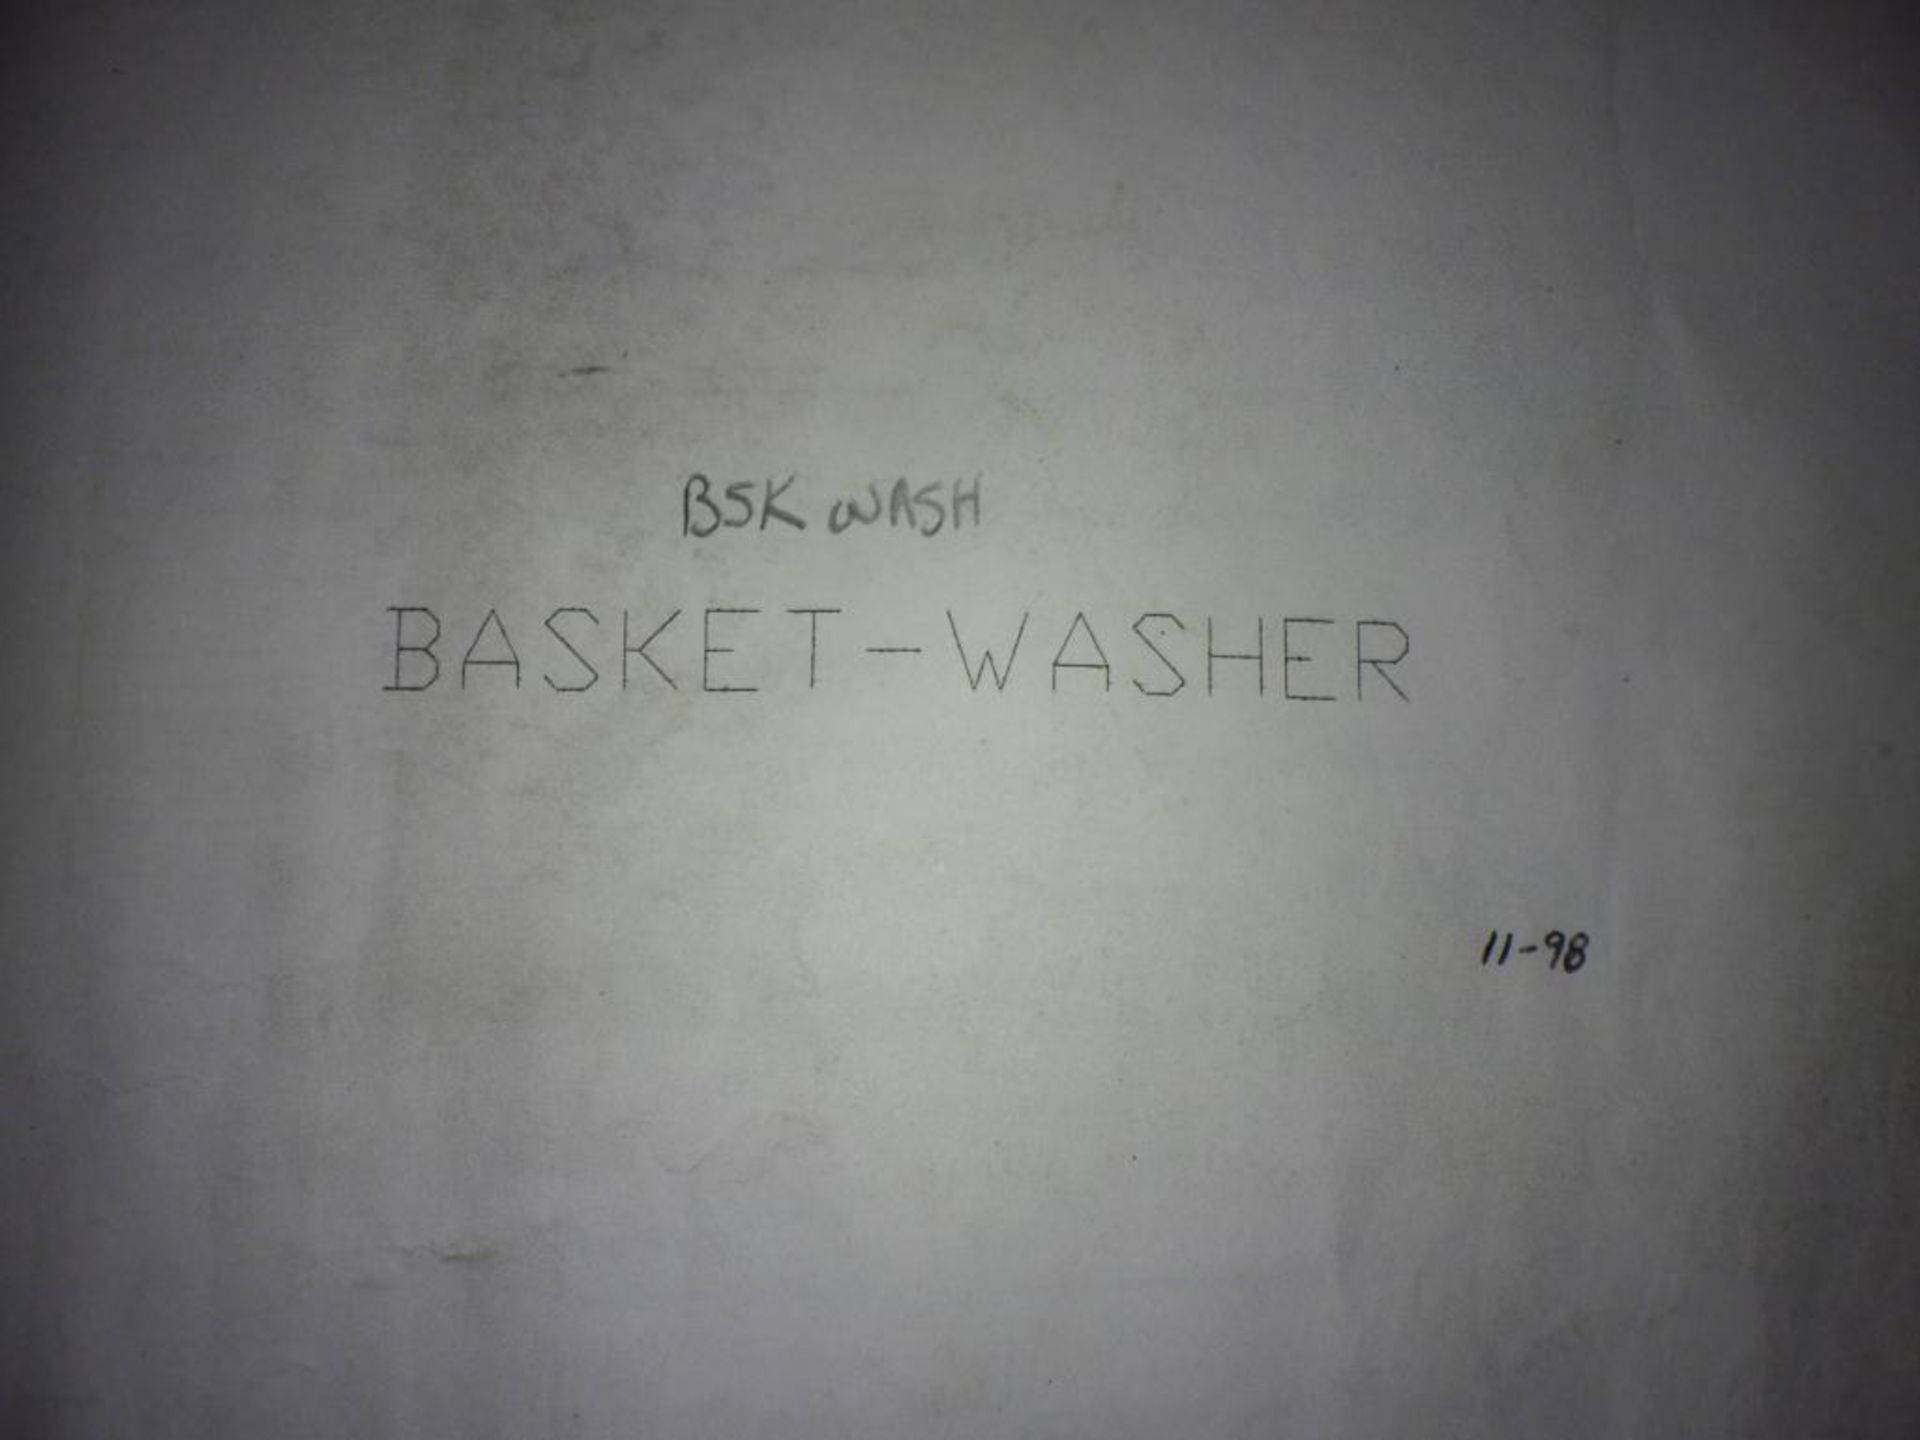 Chemstation basket washer - Image 32 of 34